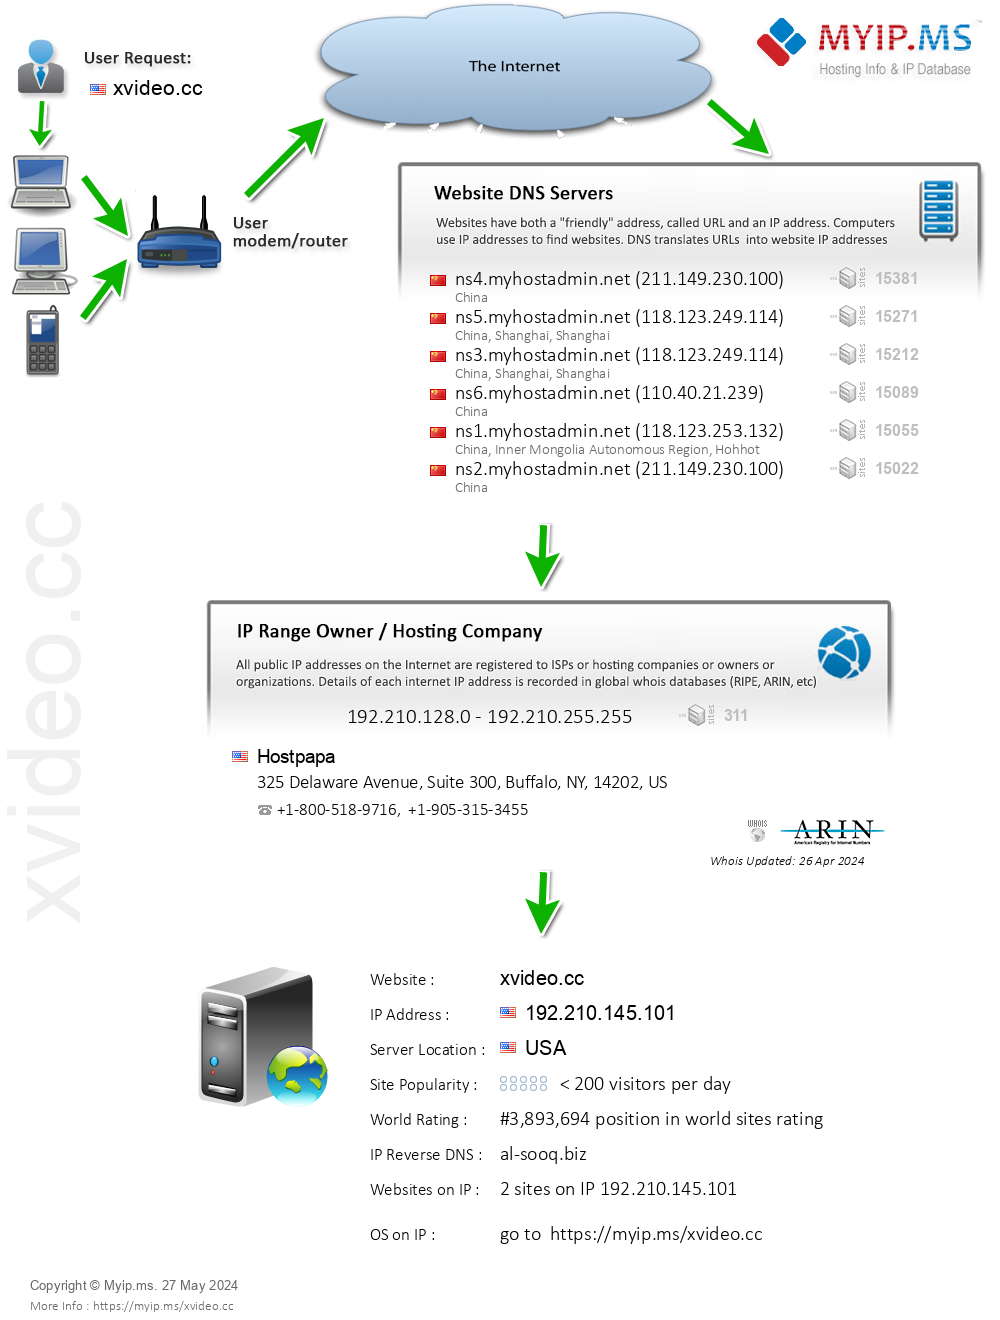 Xvideo.cc - Website Hosting Visual IP Diagram